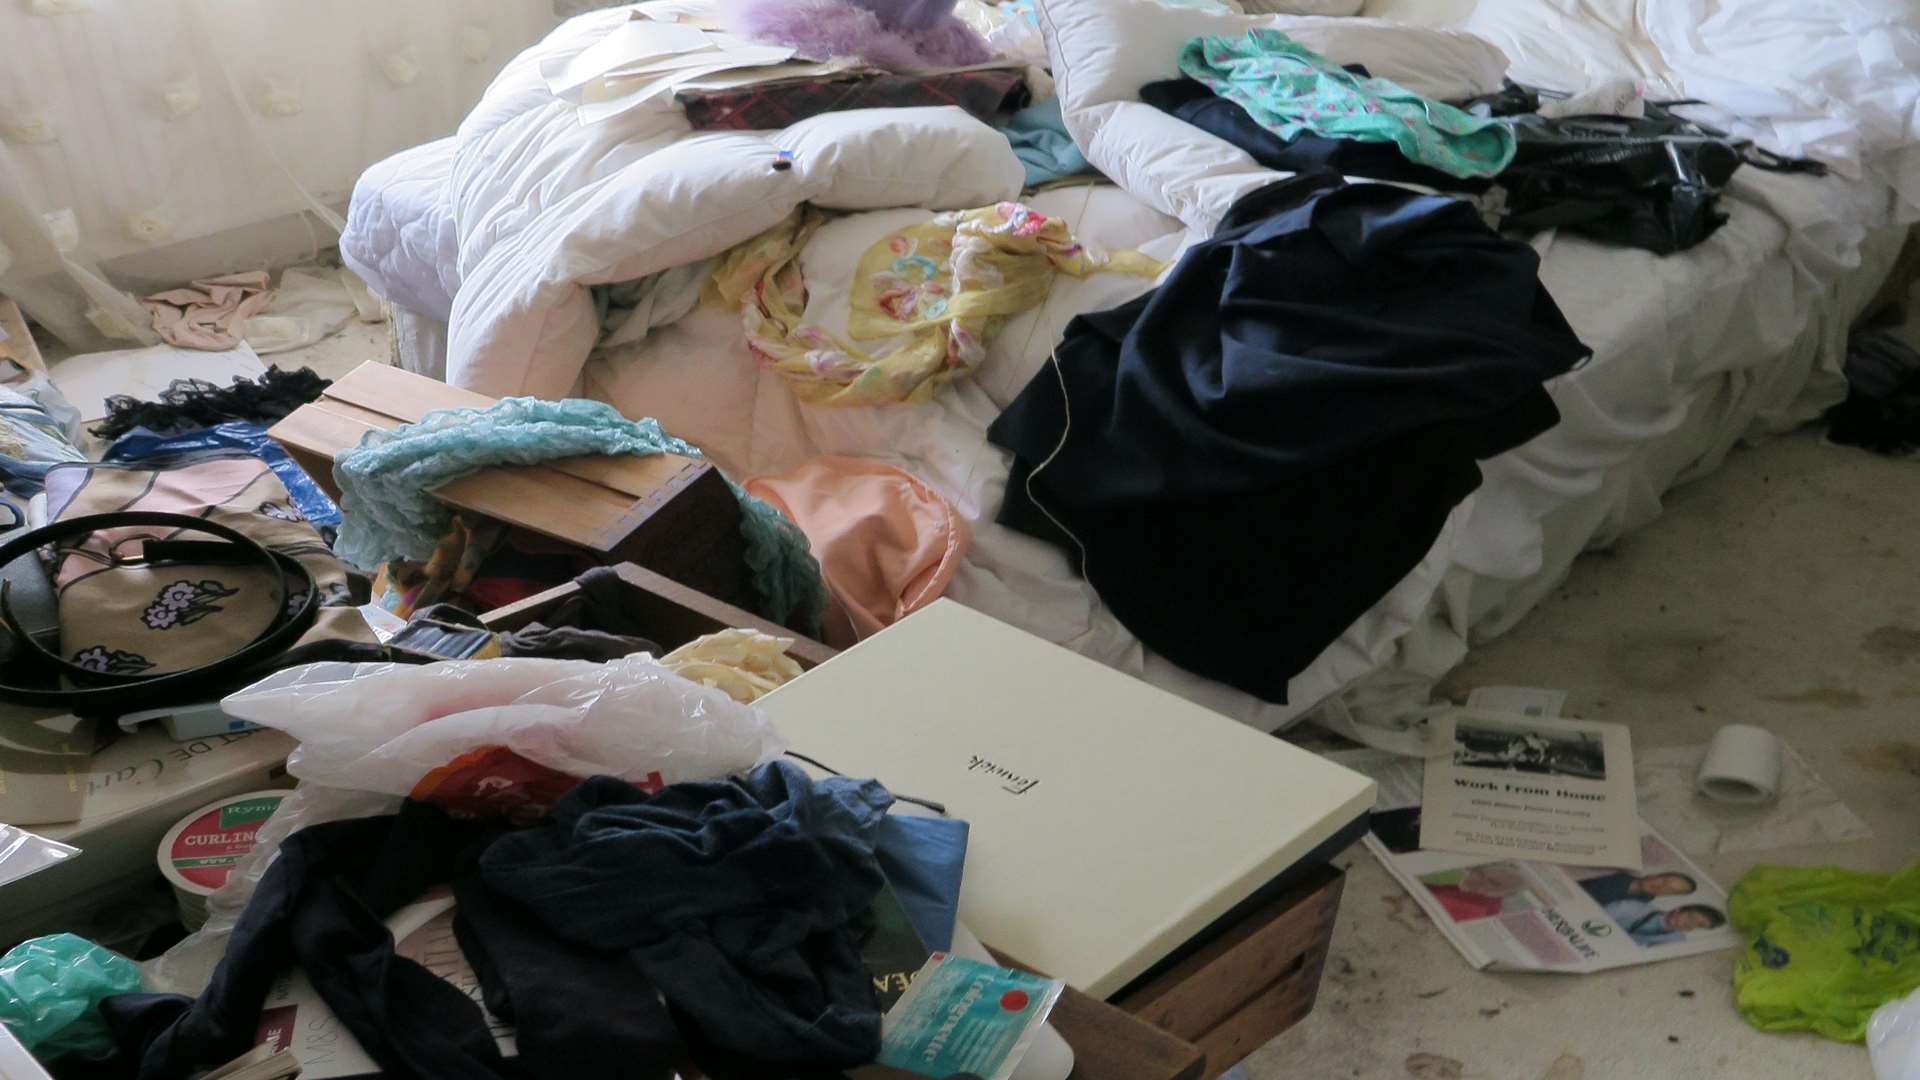 Mrs Smith's ransacked bedroom